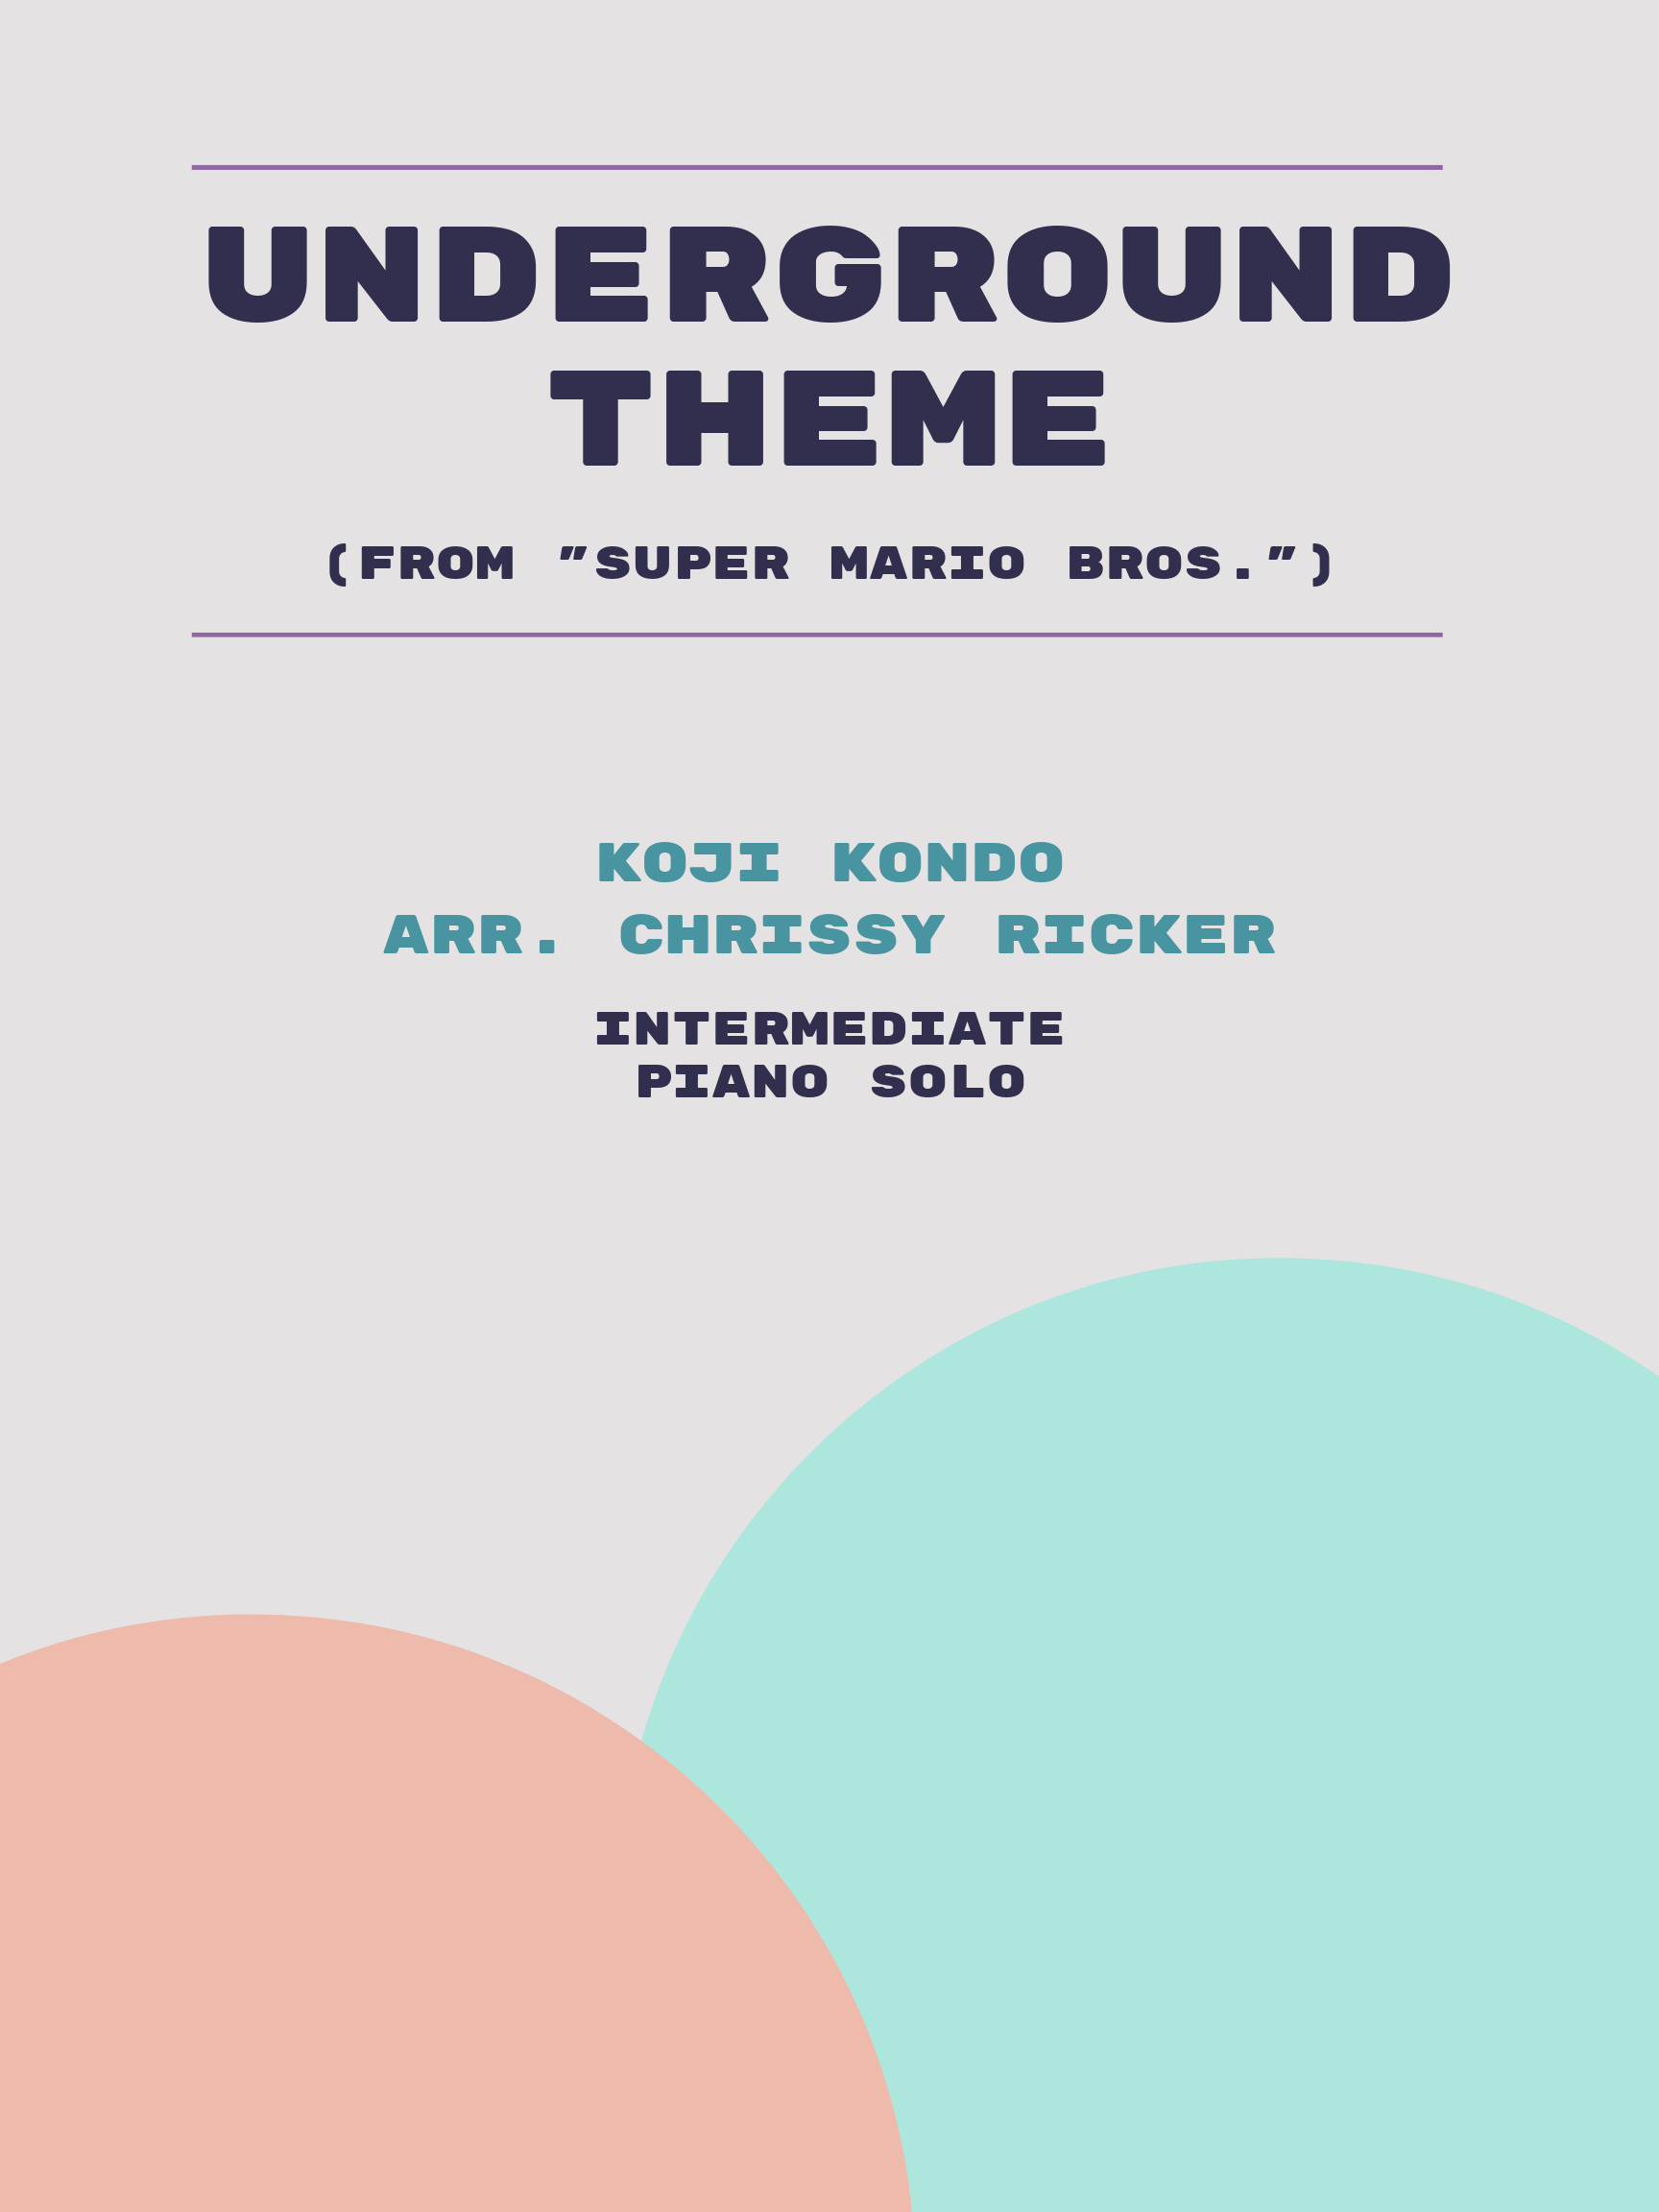 Underground Theme by Koji Kondo